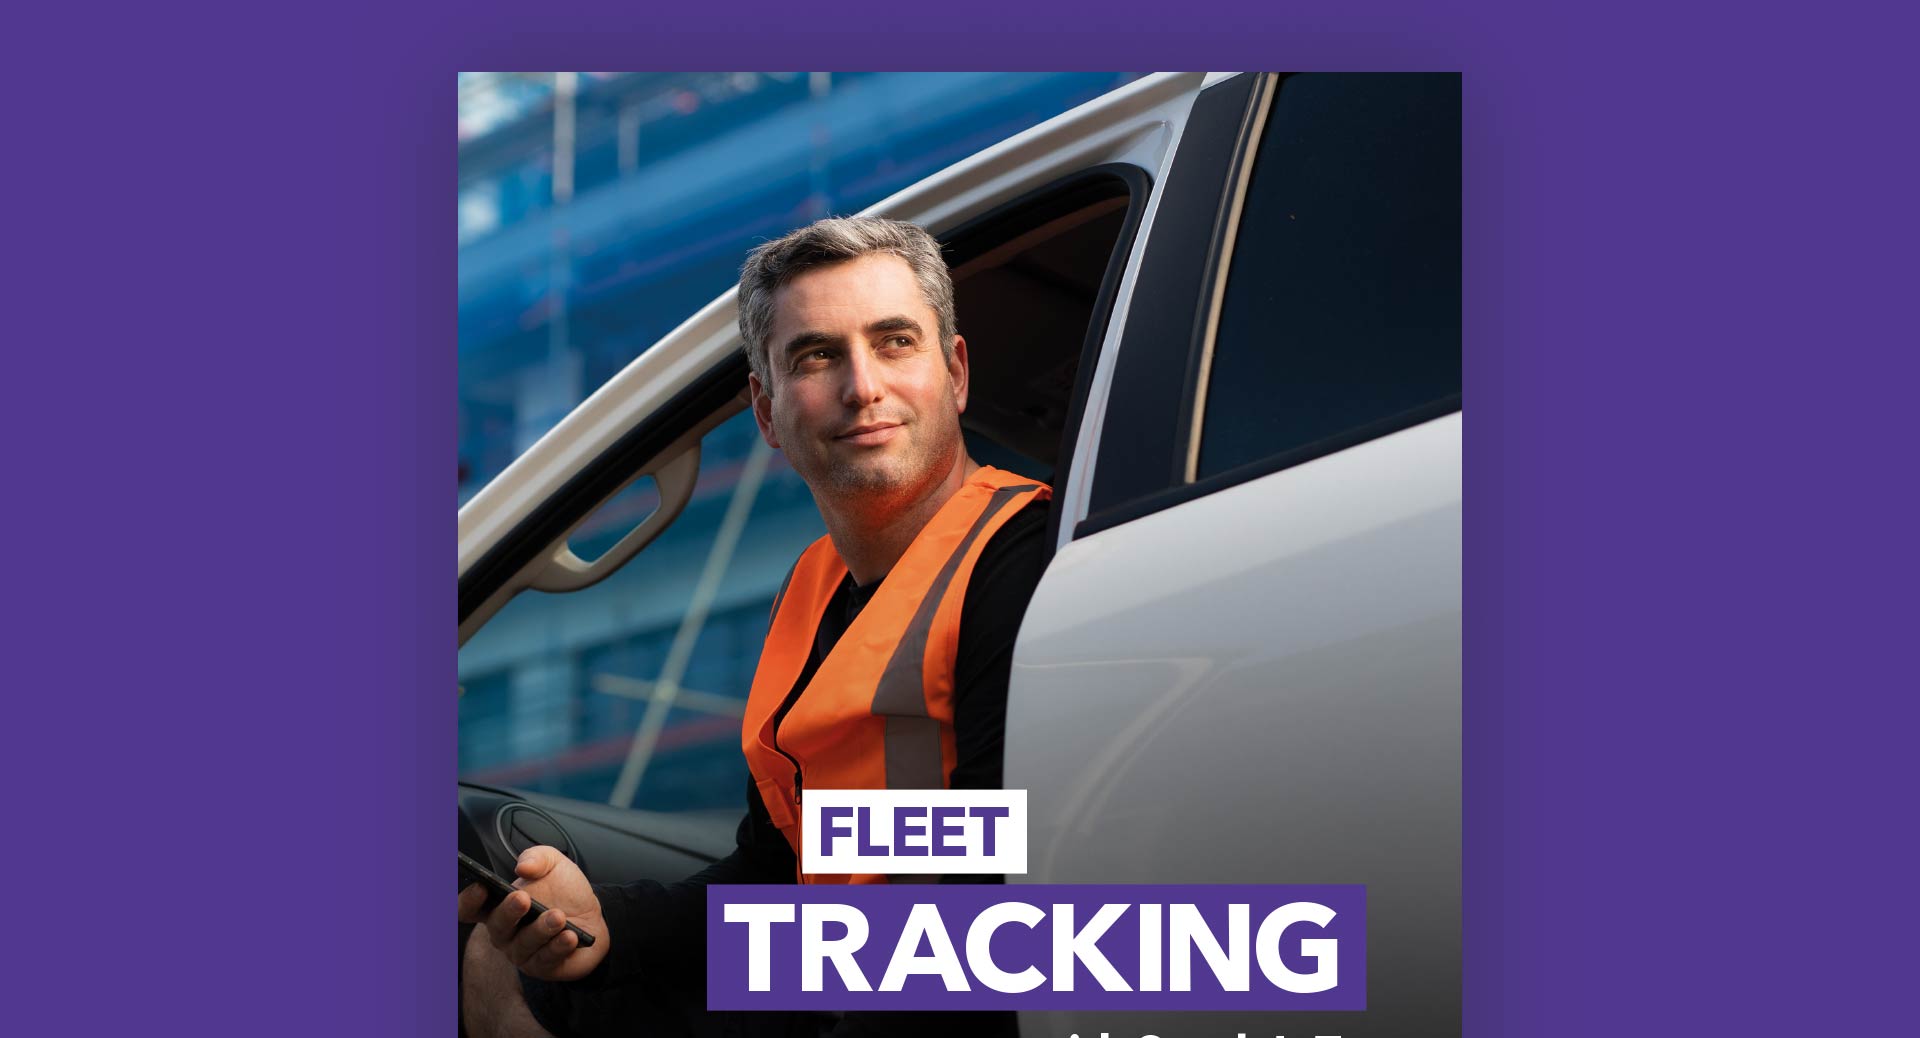 Brochure-spark-fleet-tracking